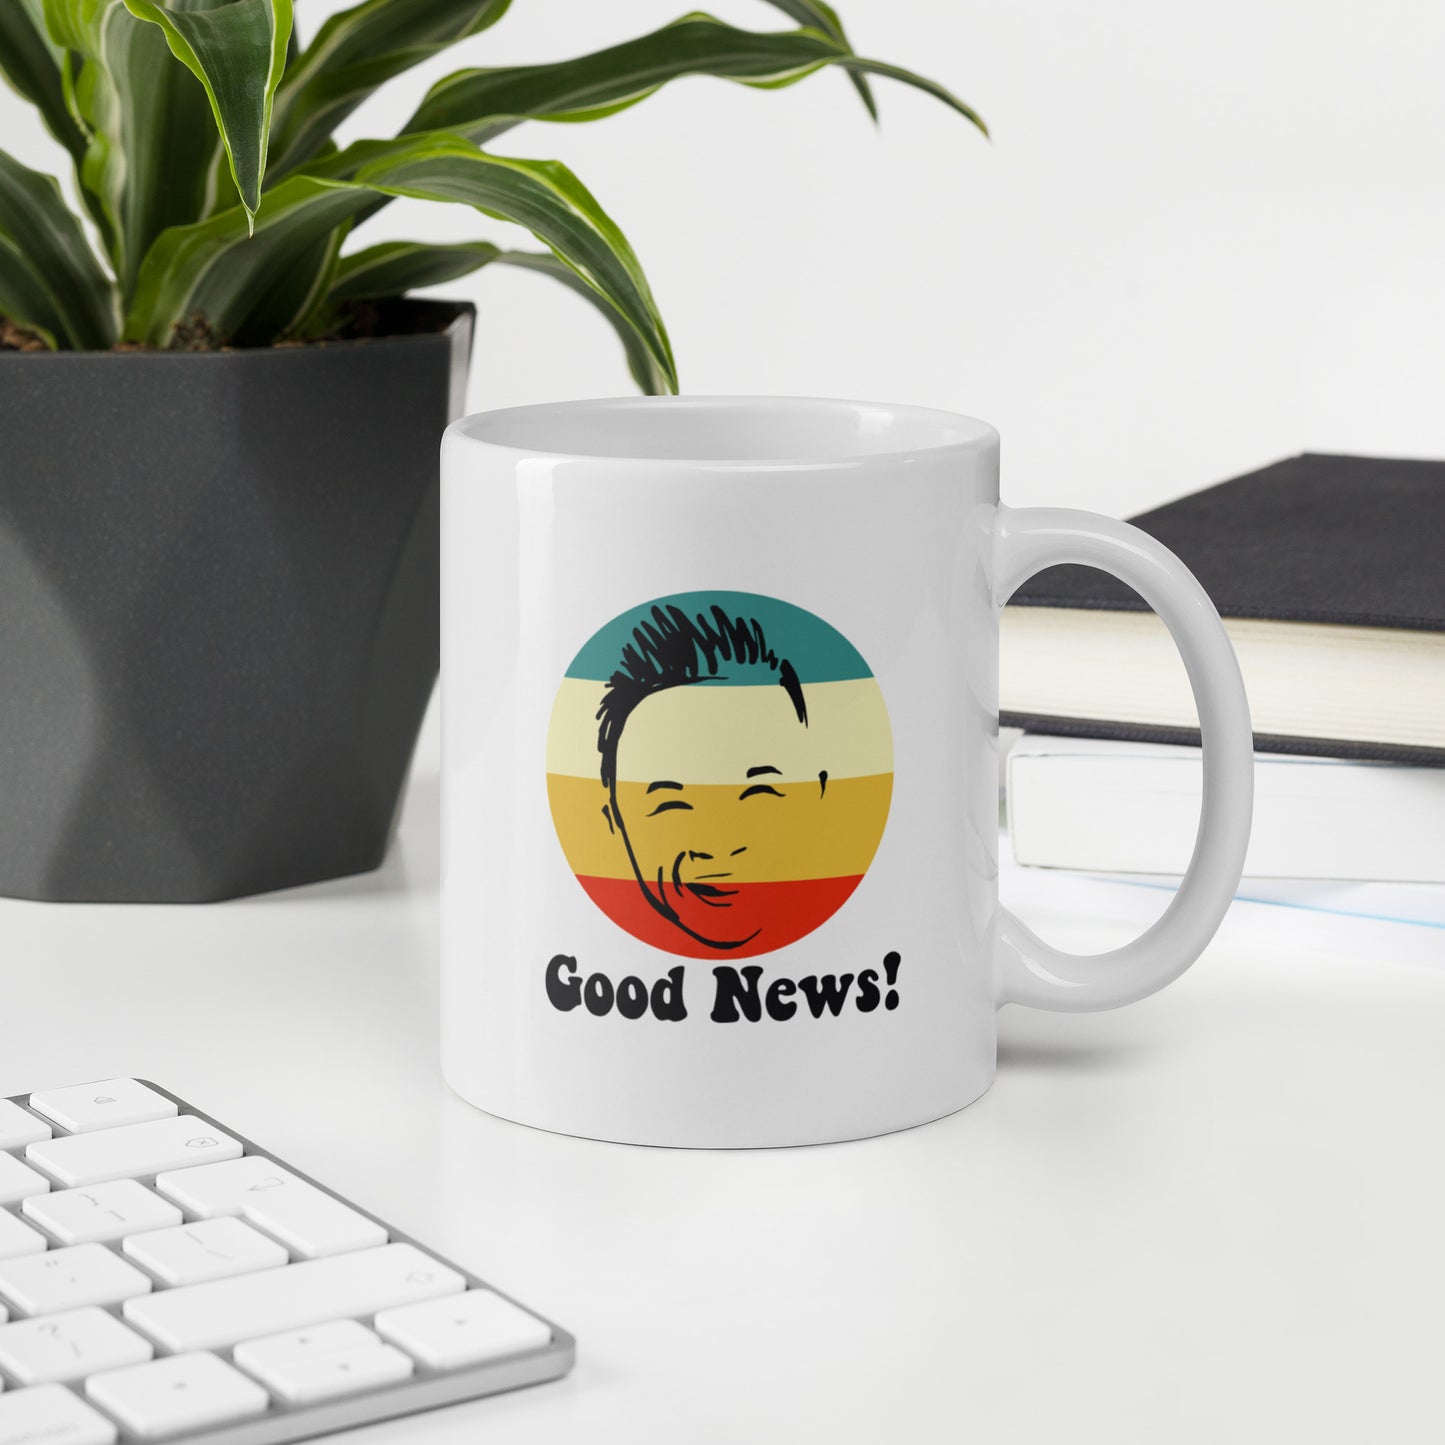 Jack Jack's "Good News!" White glossy mug